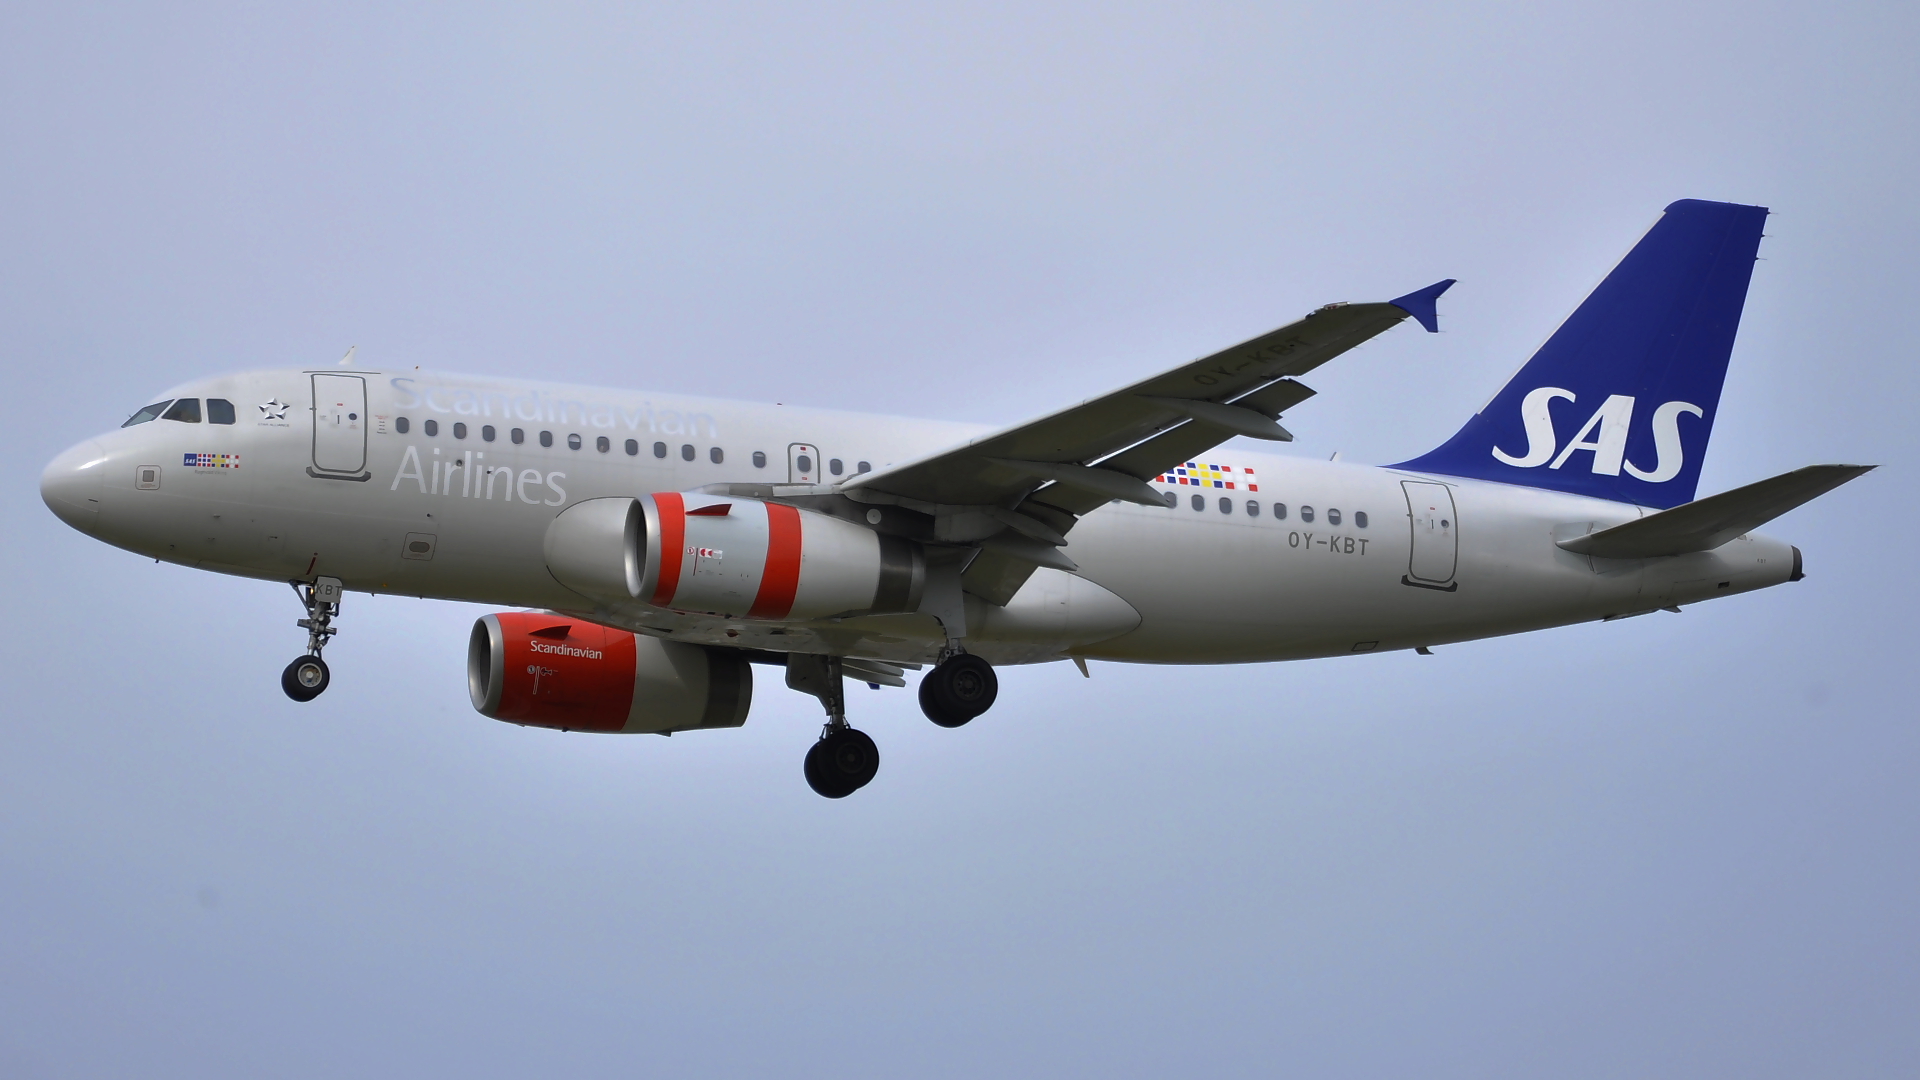 OY-KBT ✈ Scandinavian Airlines Airbus 319-132 @ London-Heathrow